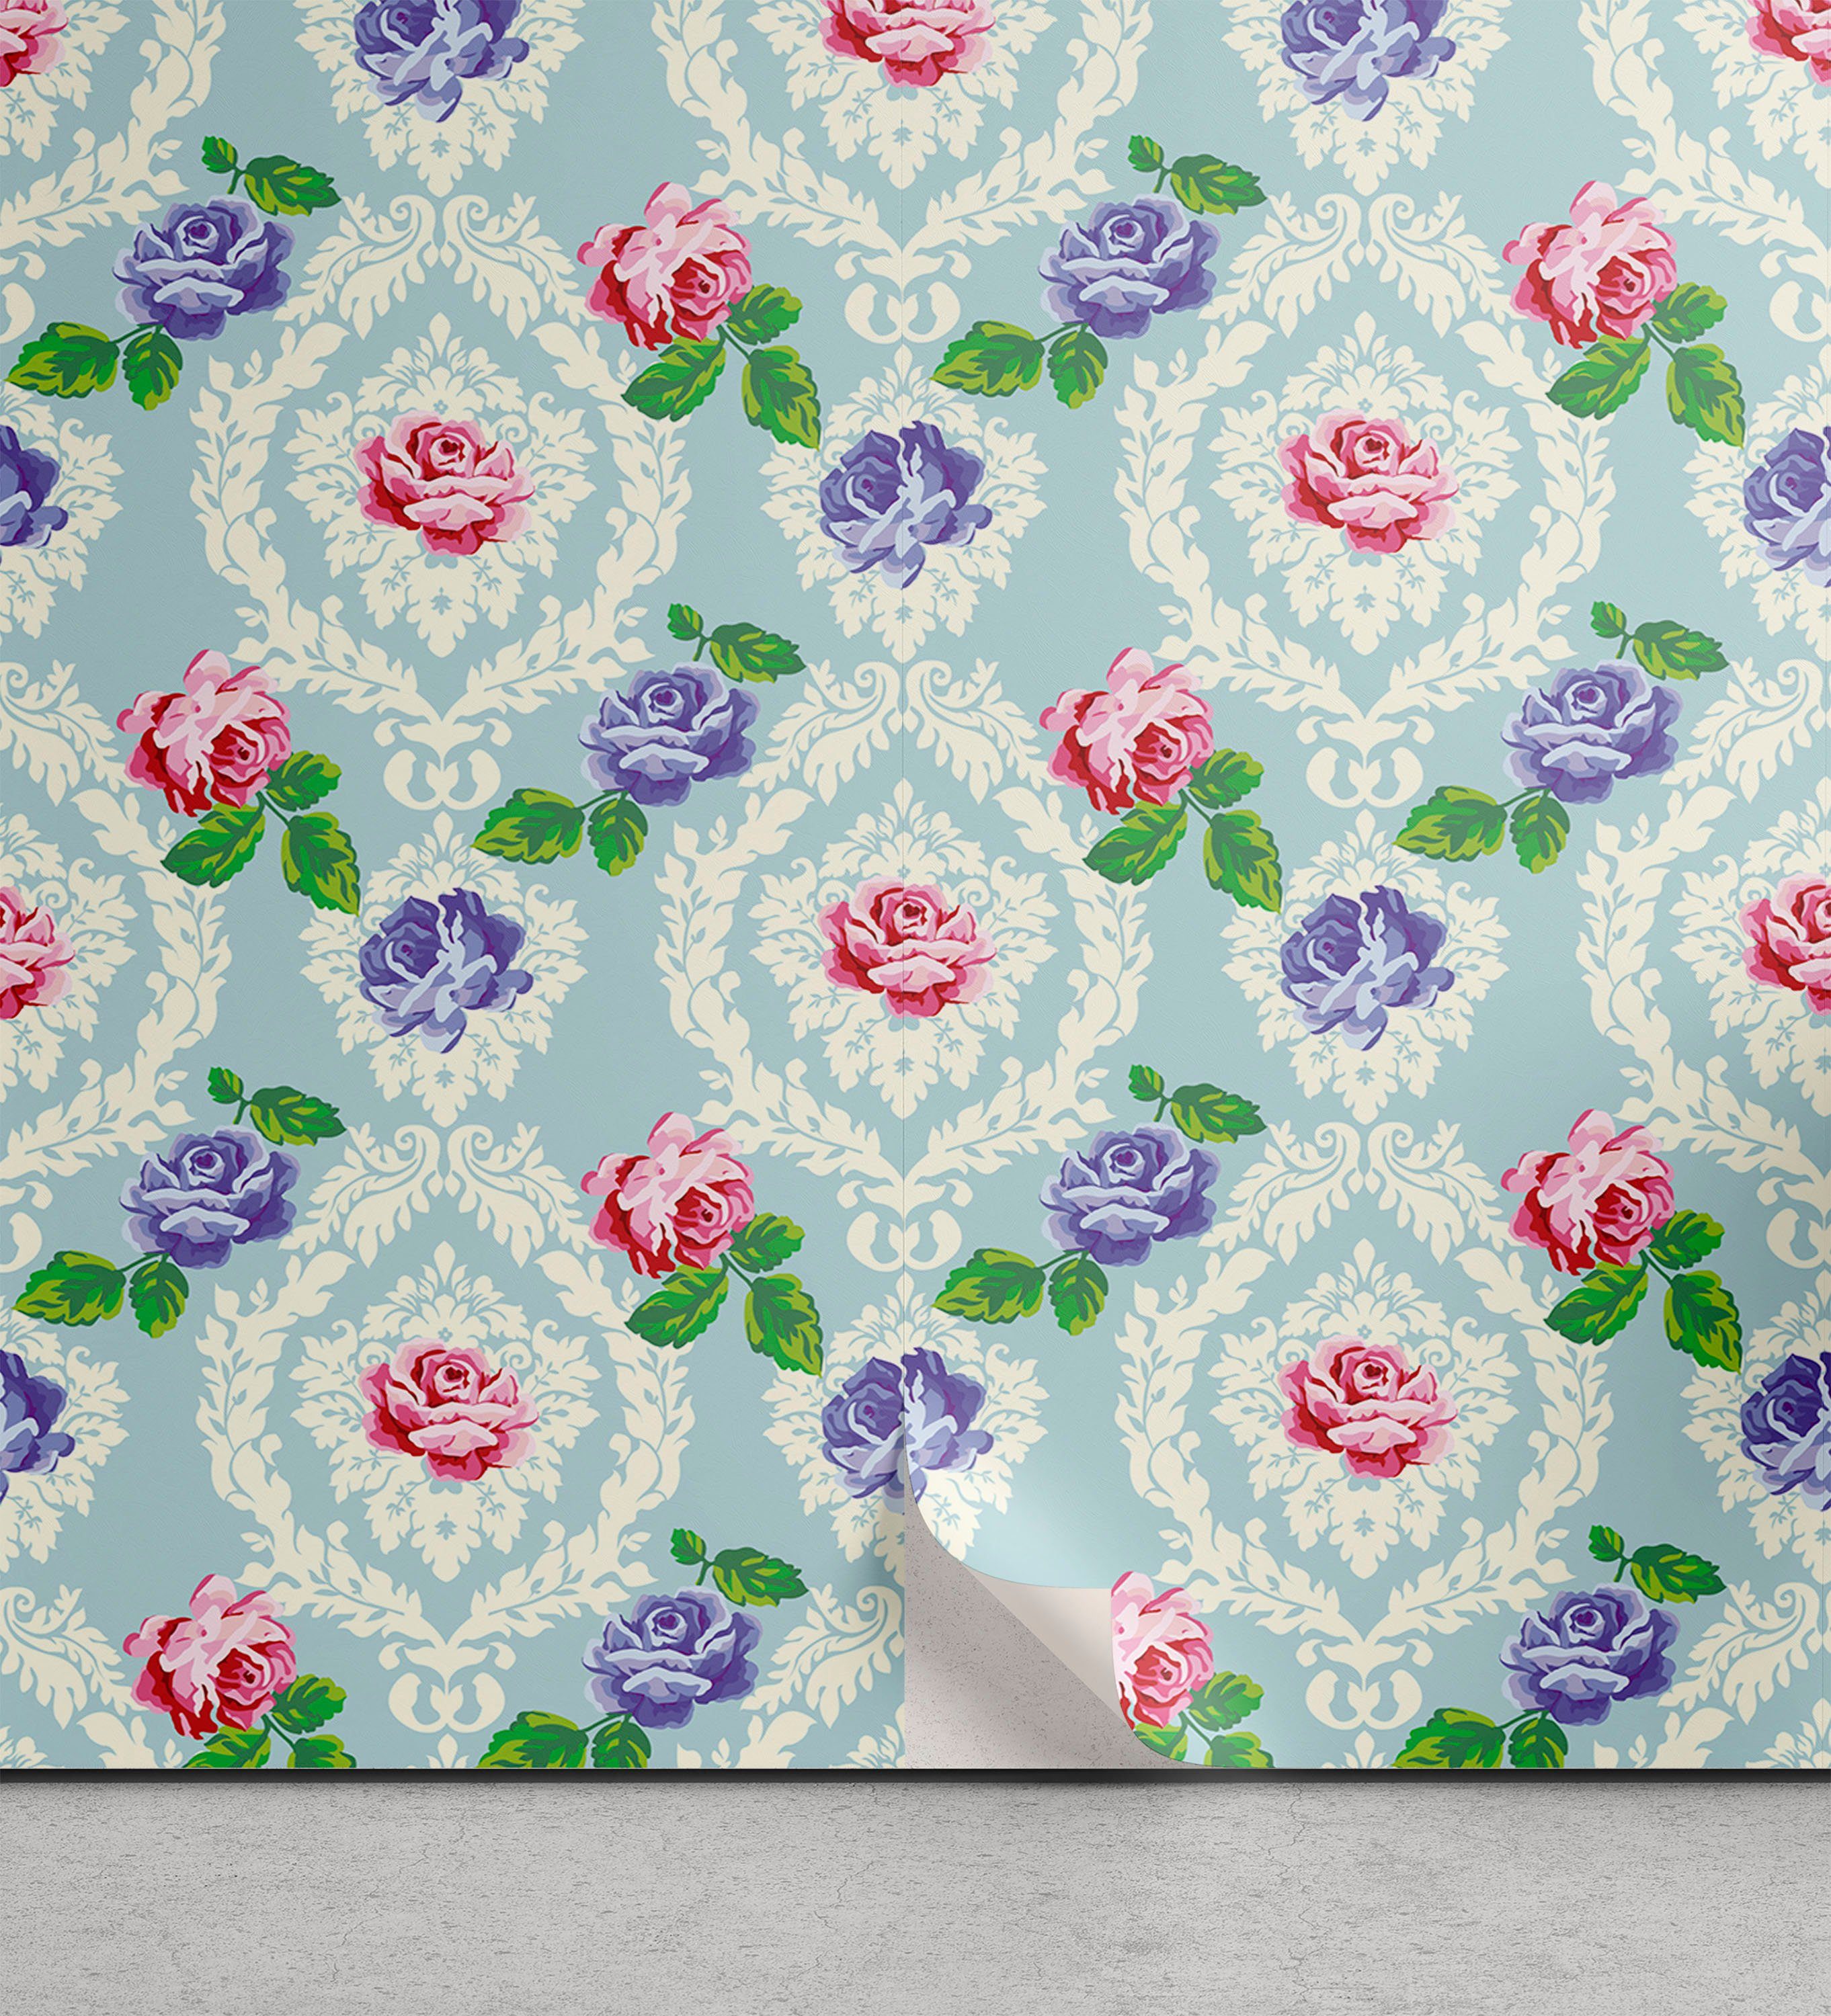 Abakuhaus Vinyltapete selbstklebendes Wohnzimmer Küchenakzent, Floral Barock farbige Rosen